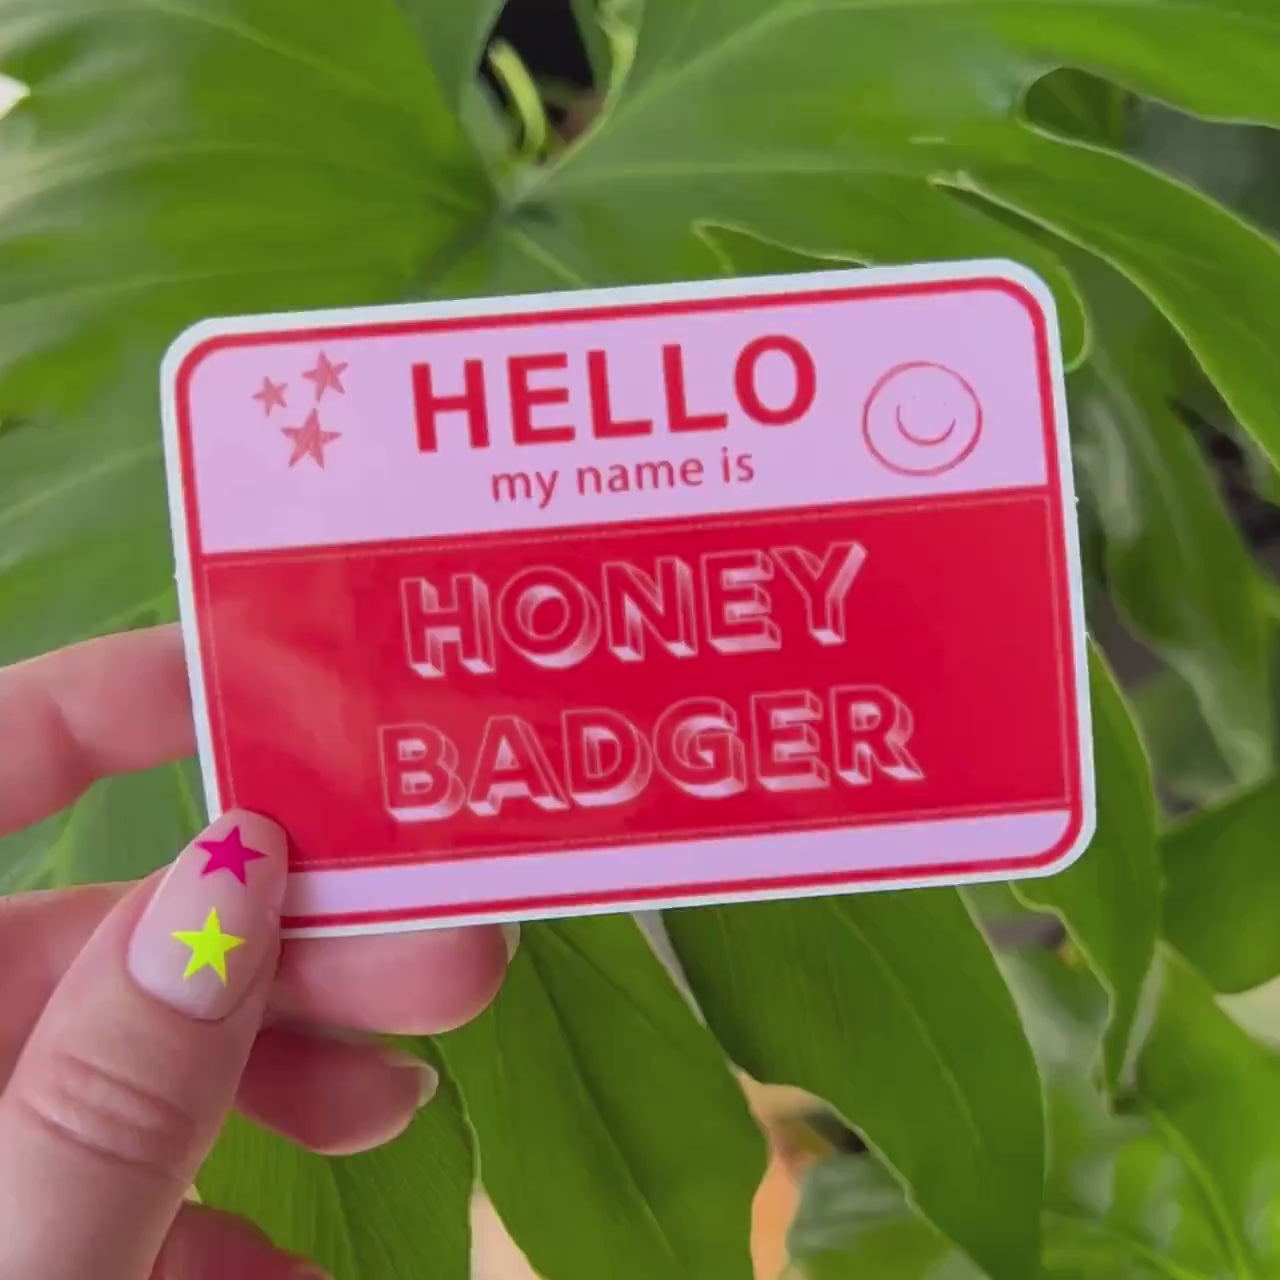 Hello My Name Is Honey Badger sticker